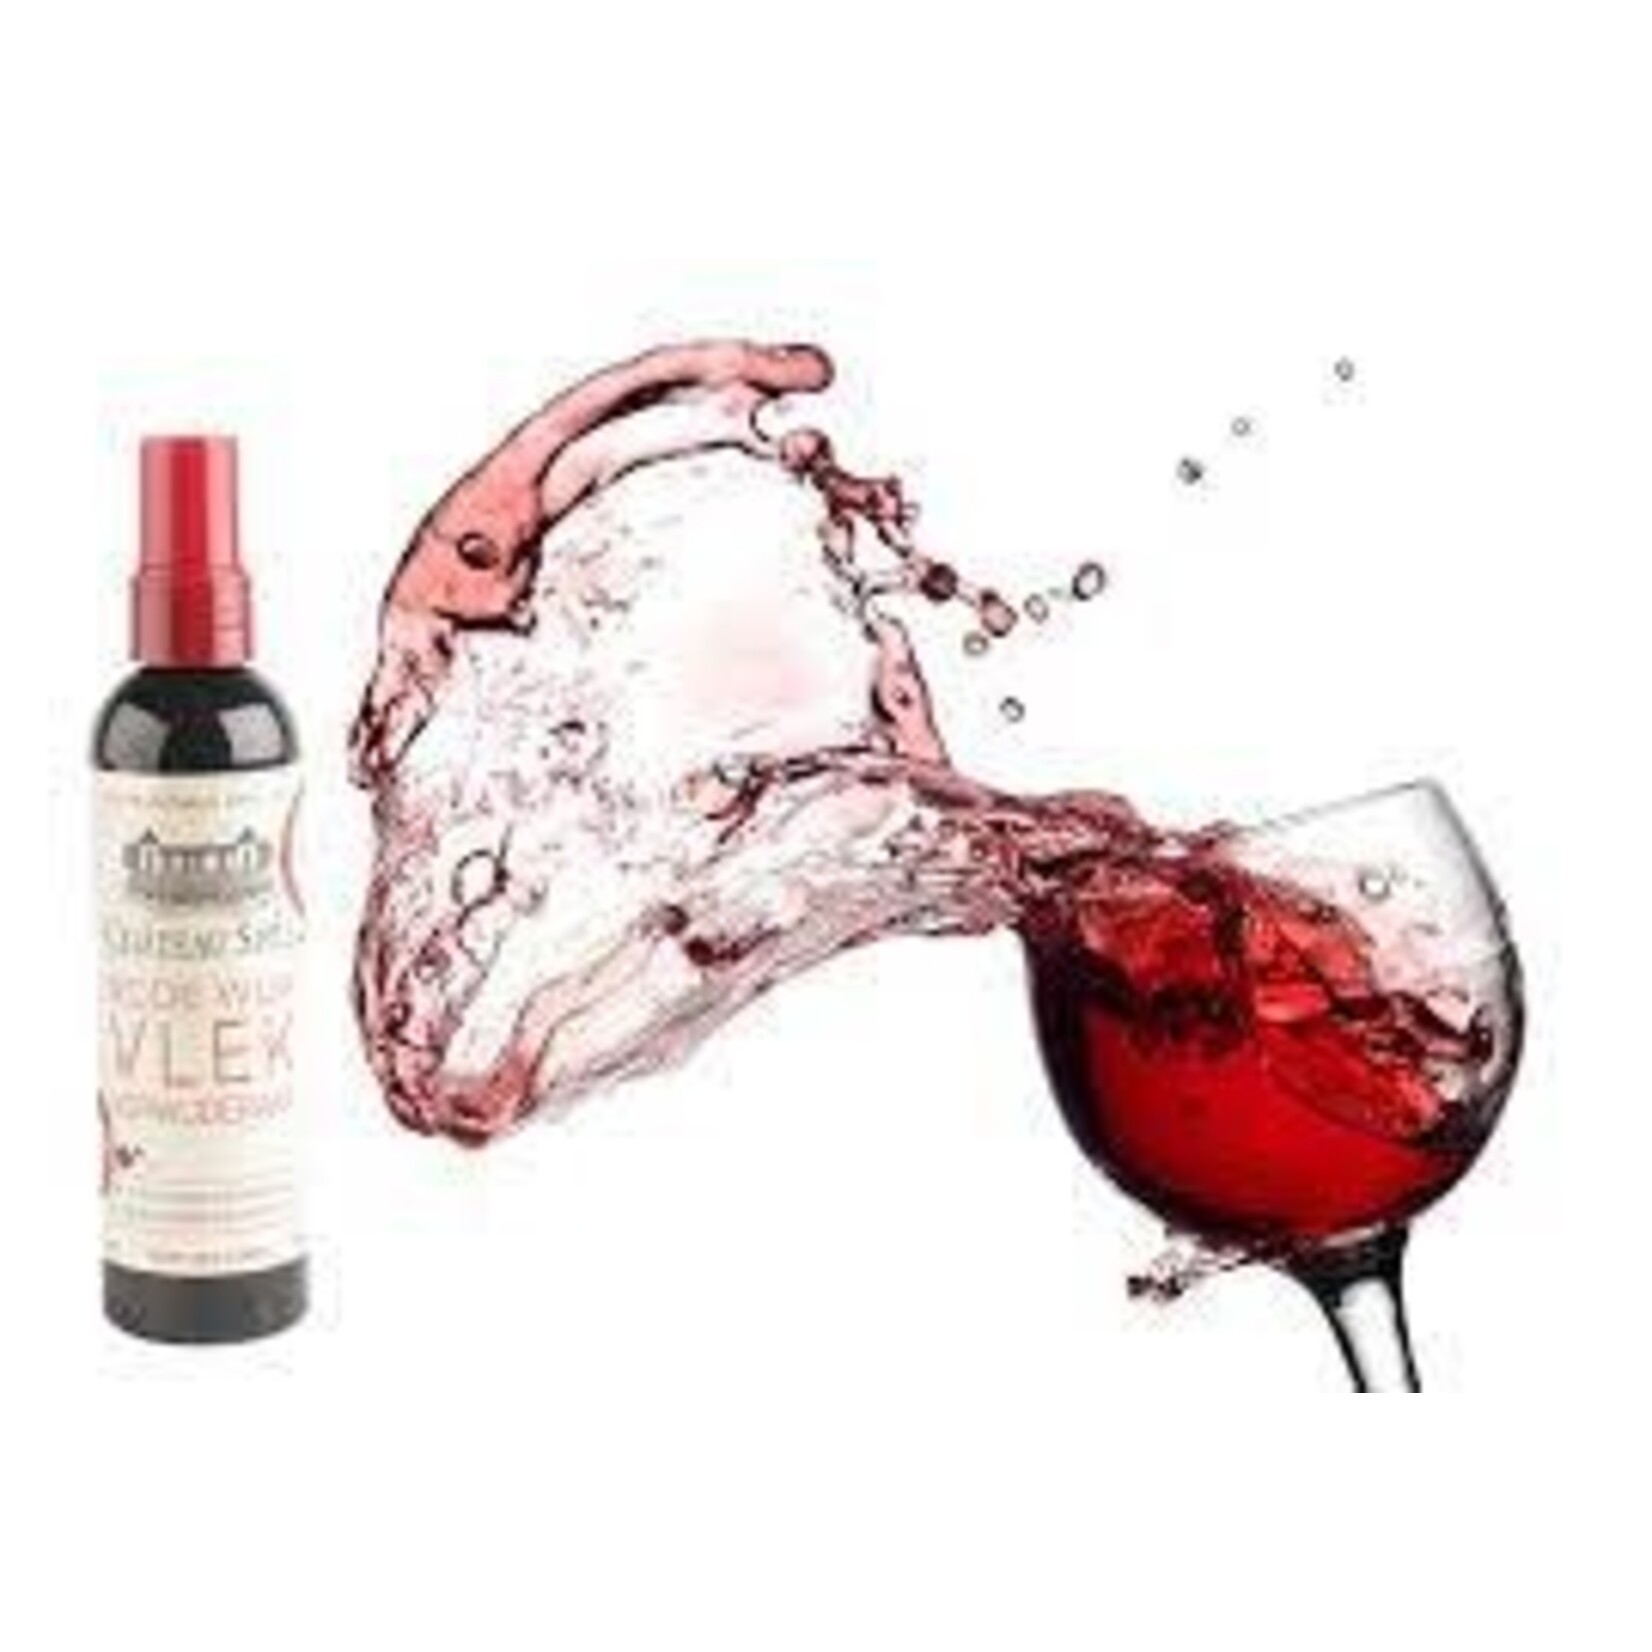 Diverse Merken Chateau Spill Rode wijn vlek verwijderaar